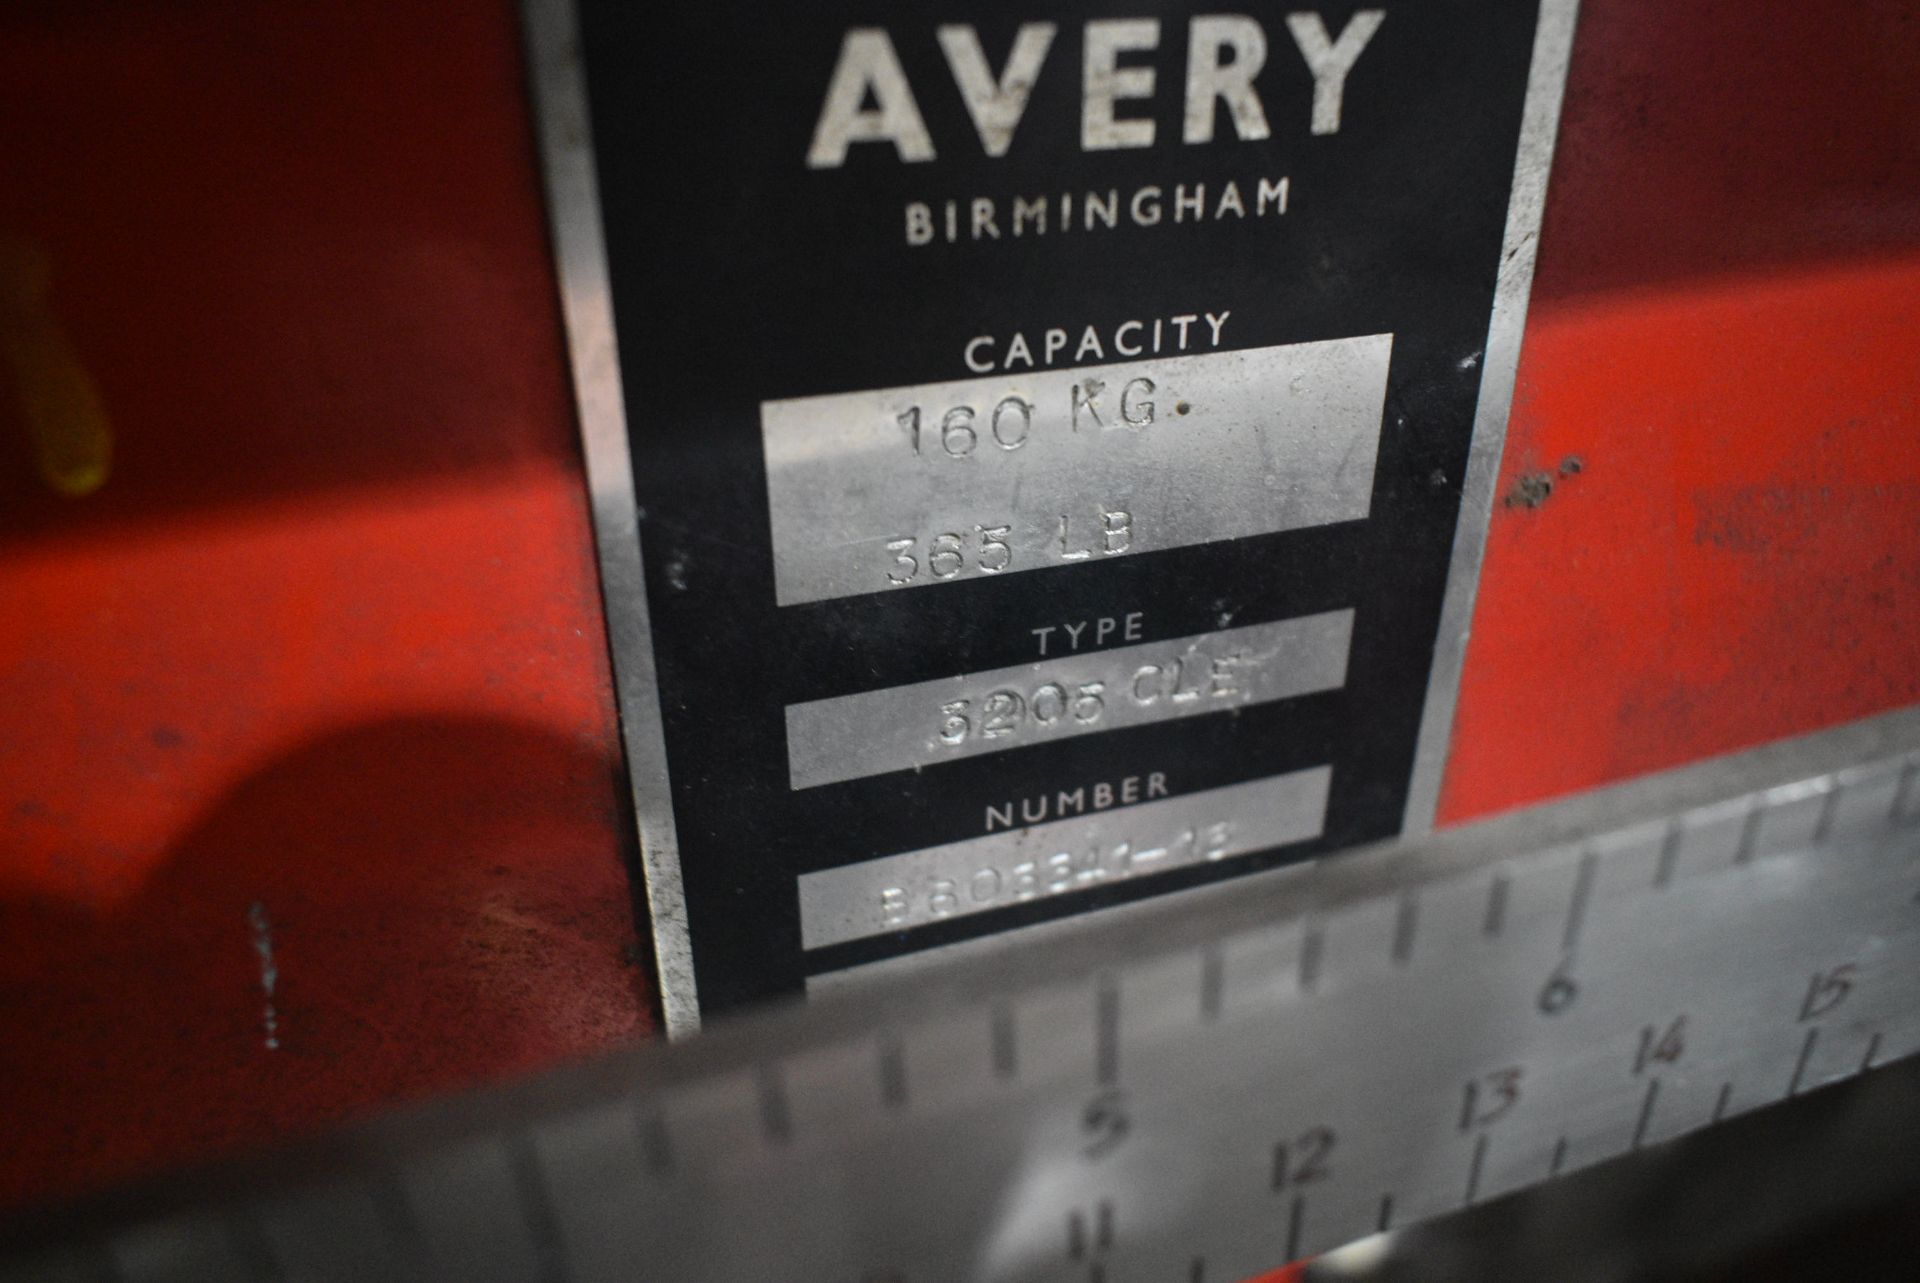 Avery 3205 CLE 160kg Dial Indicating Portable Platform Weighing Machine, serial no. B603341-13 (free - Image 2 of 2